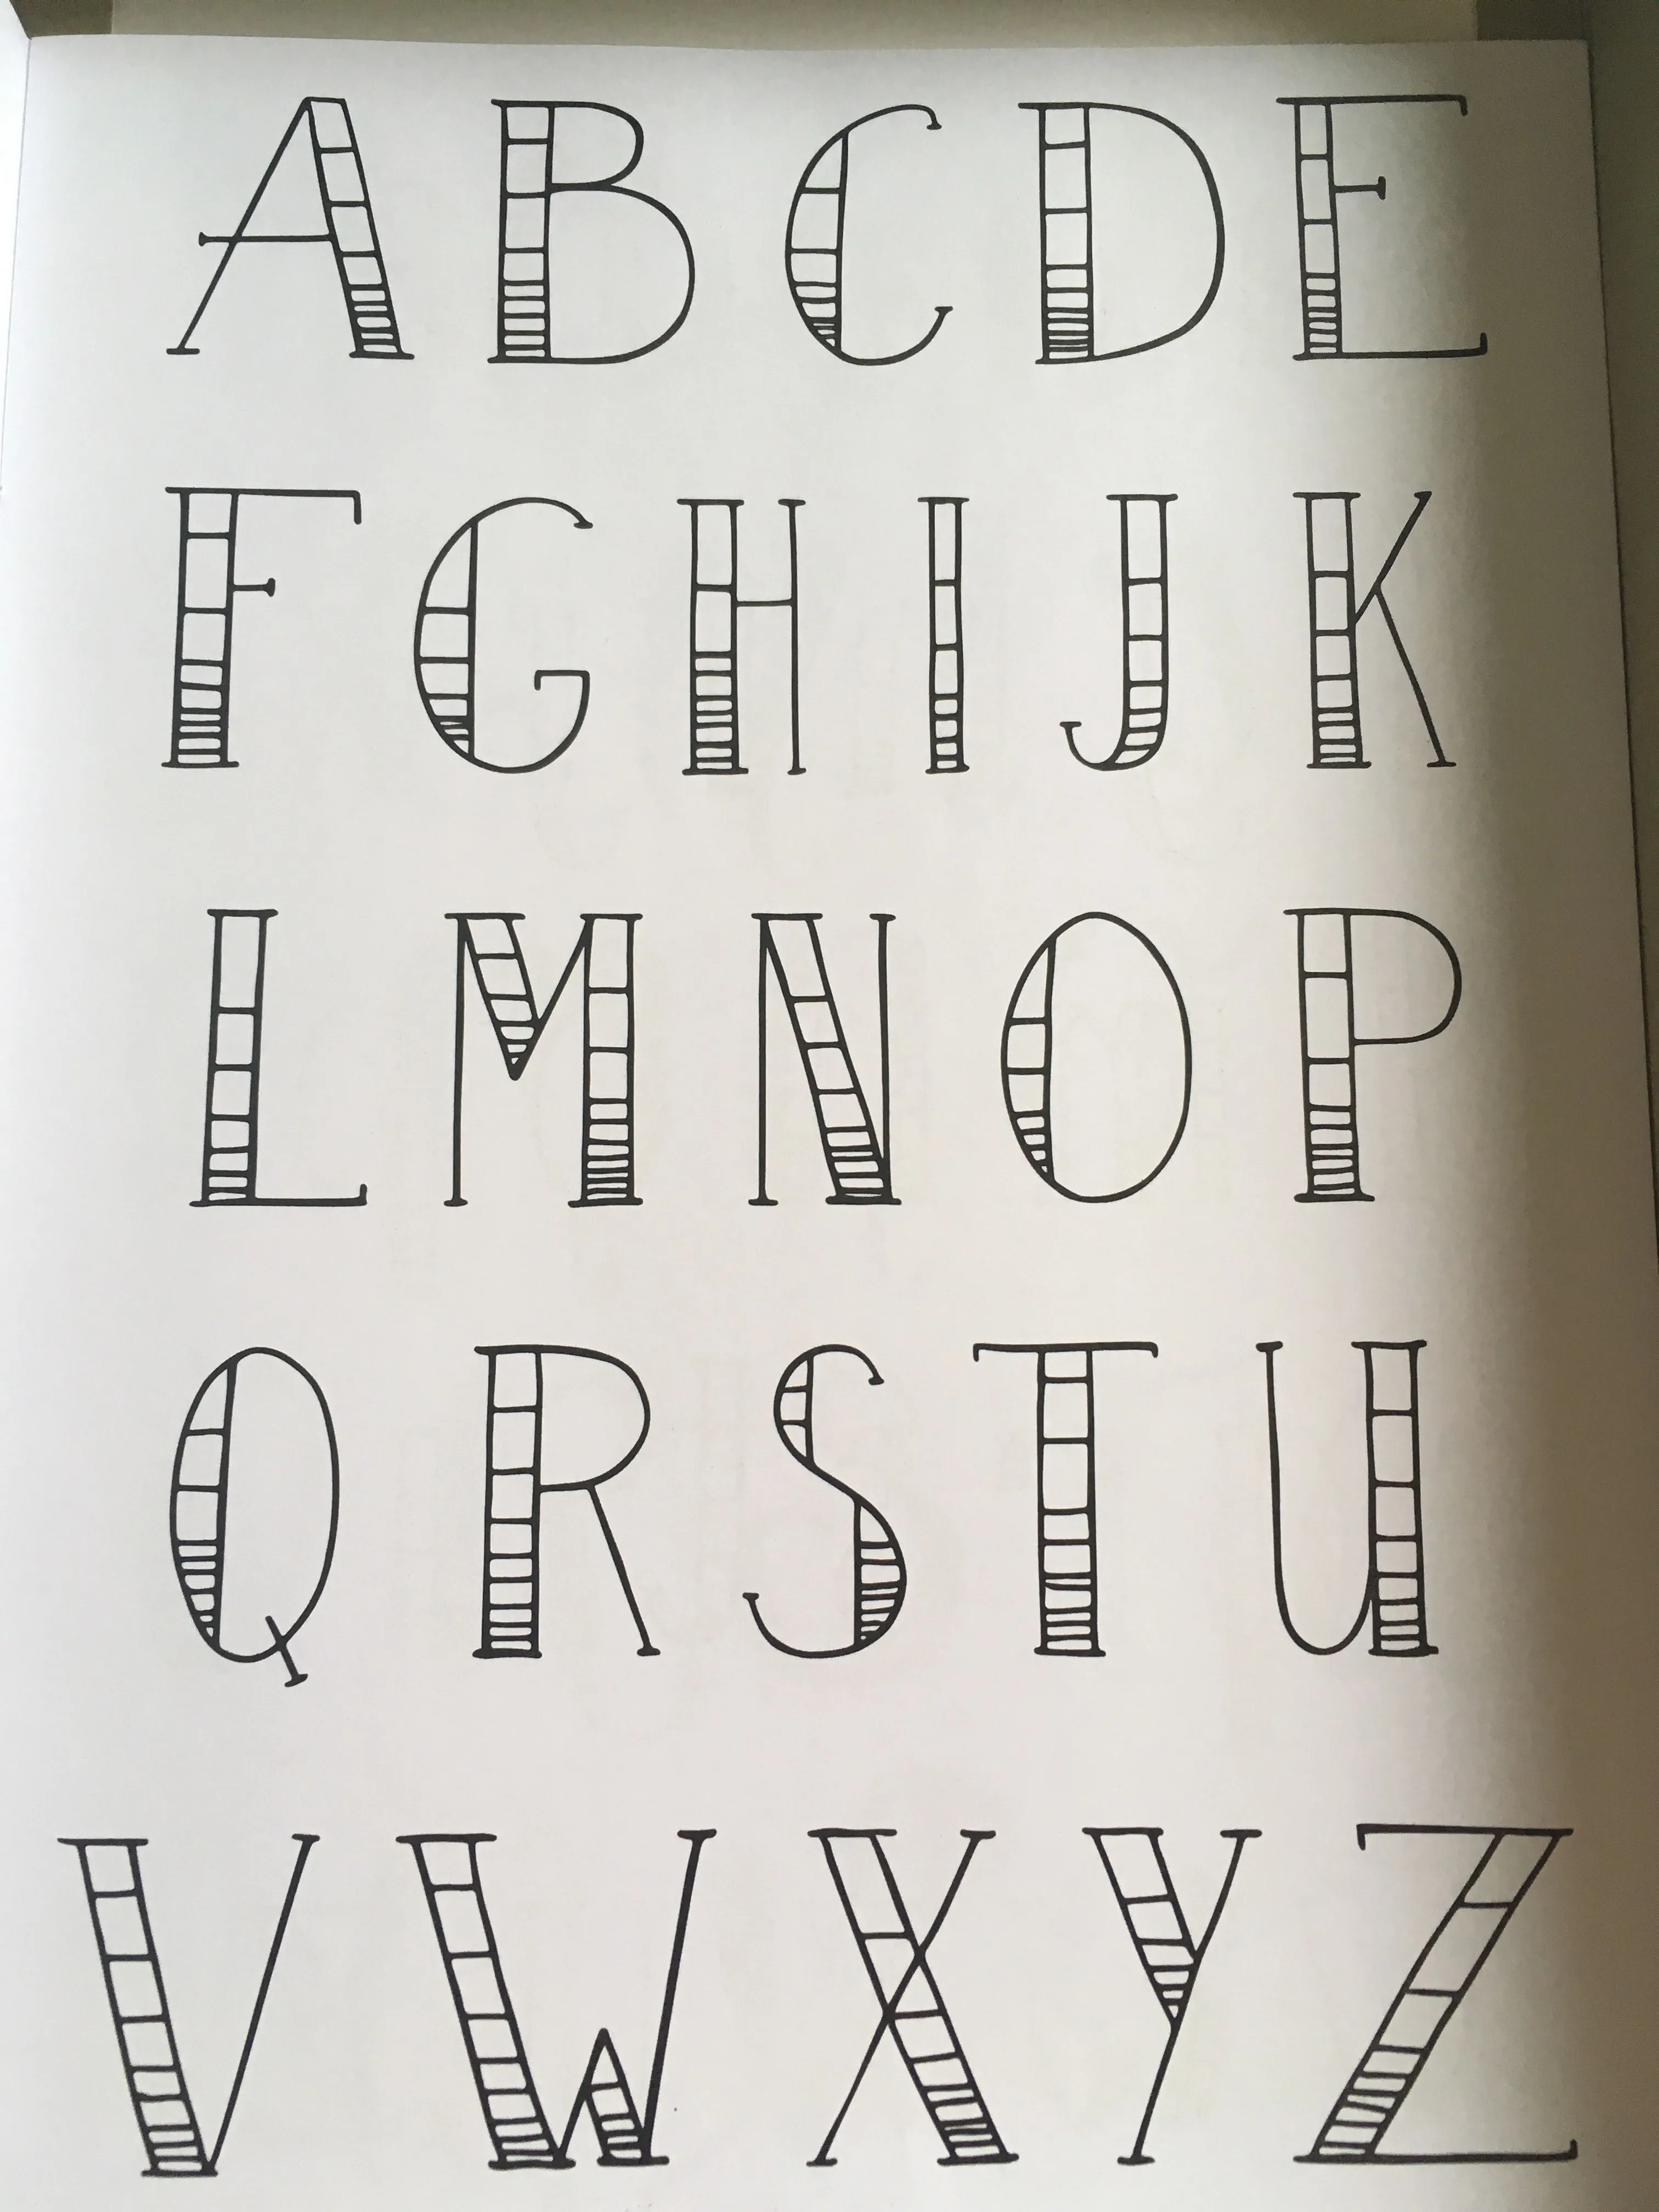 Pin de RODRIGO PEREZ en Alfabeto letras bonitas | Tipos de letras abecedario,  Moldes de letras bonitas, Alfabeto letras bonitas